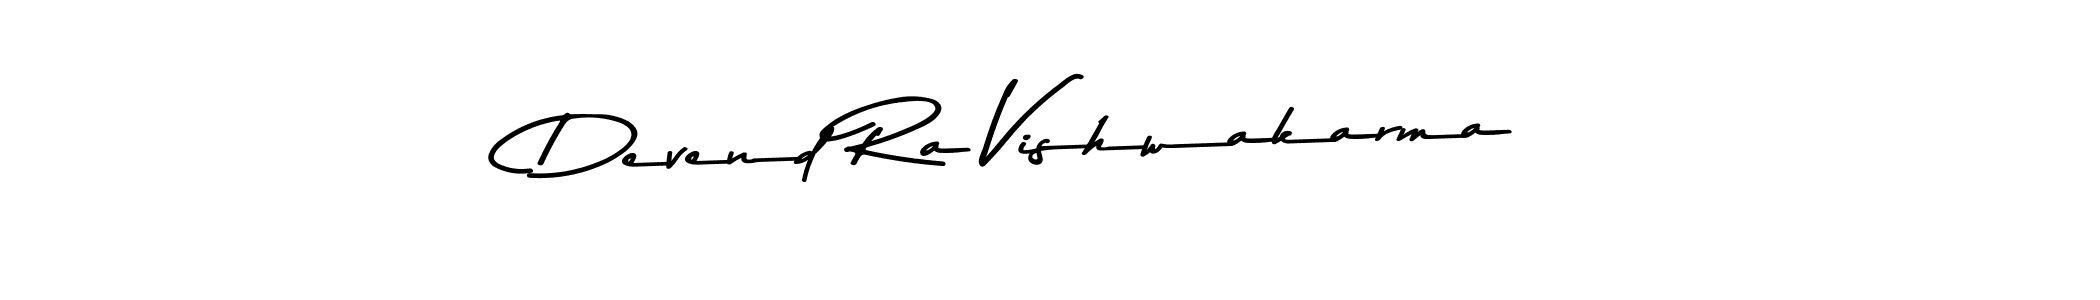 Devend Ra Vishwakarma stylish signature style. Best Handwritten Sign (Asem Kandis PERSONAL USE) for my name. Handwritten Signature Collection Ideas for my name Devend Ra Vishwakarma. Devend Ra Vishwakarma signature style 9 images and pictures png